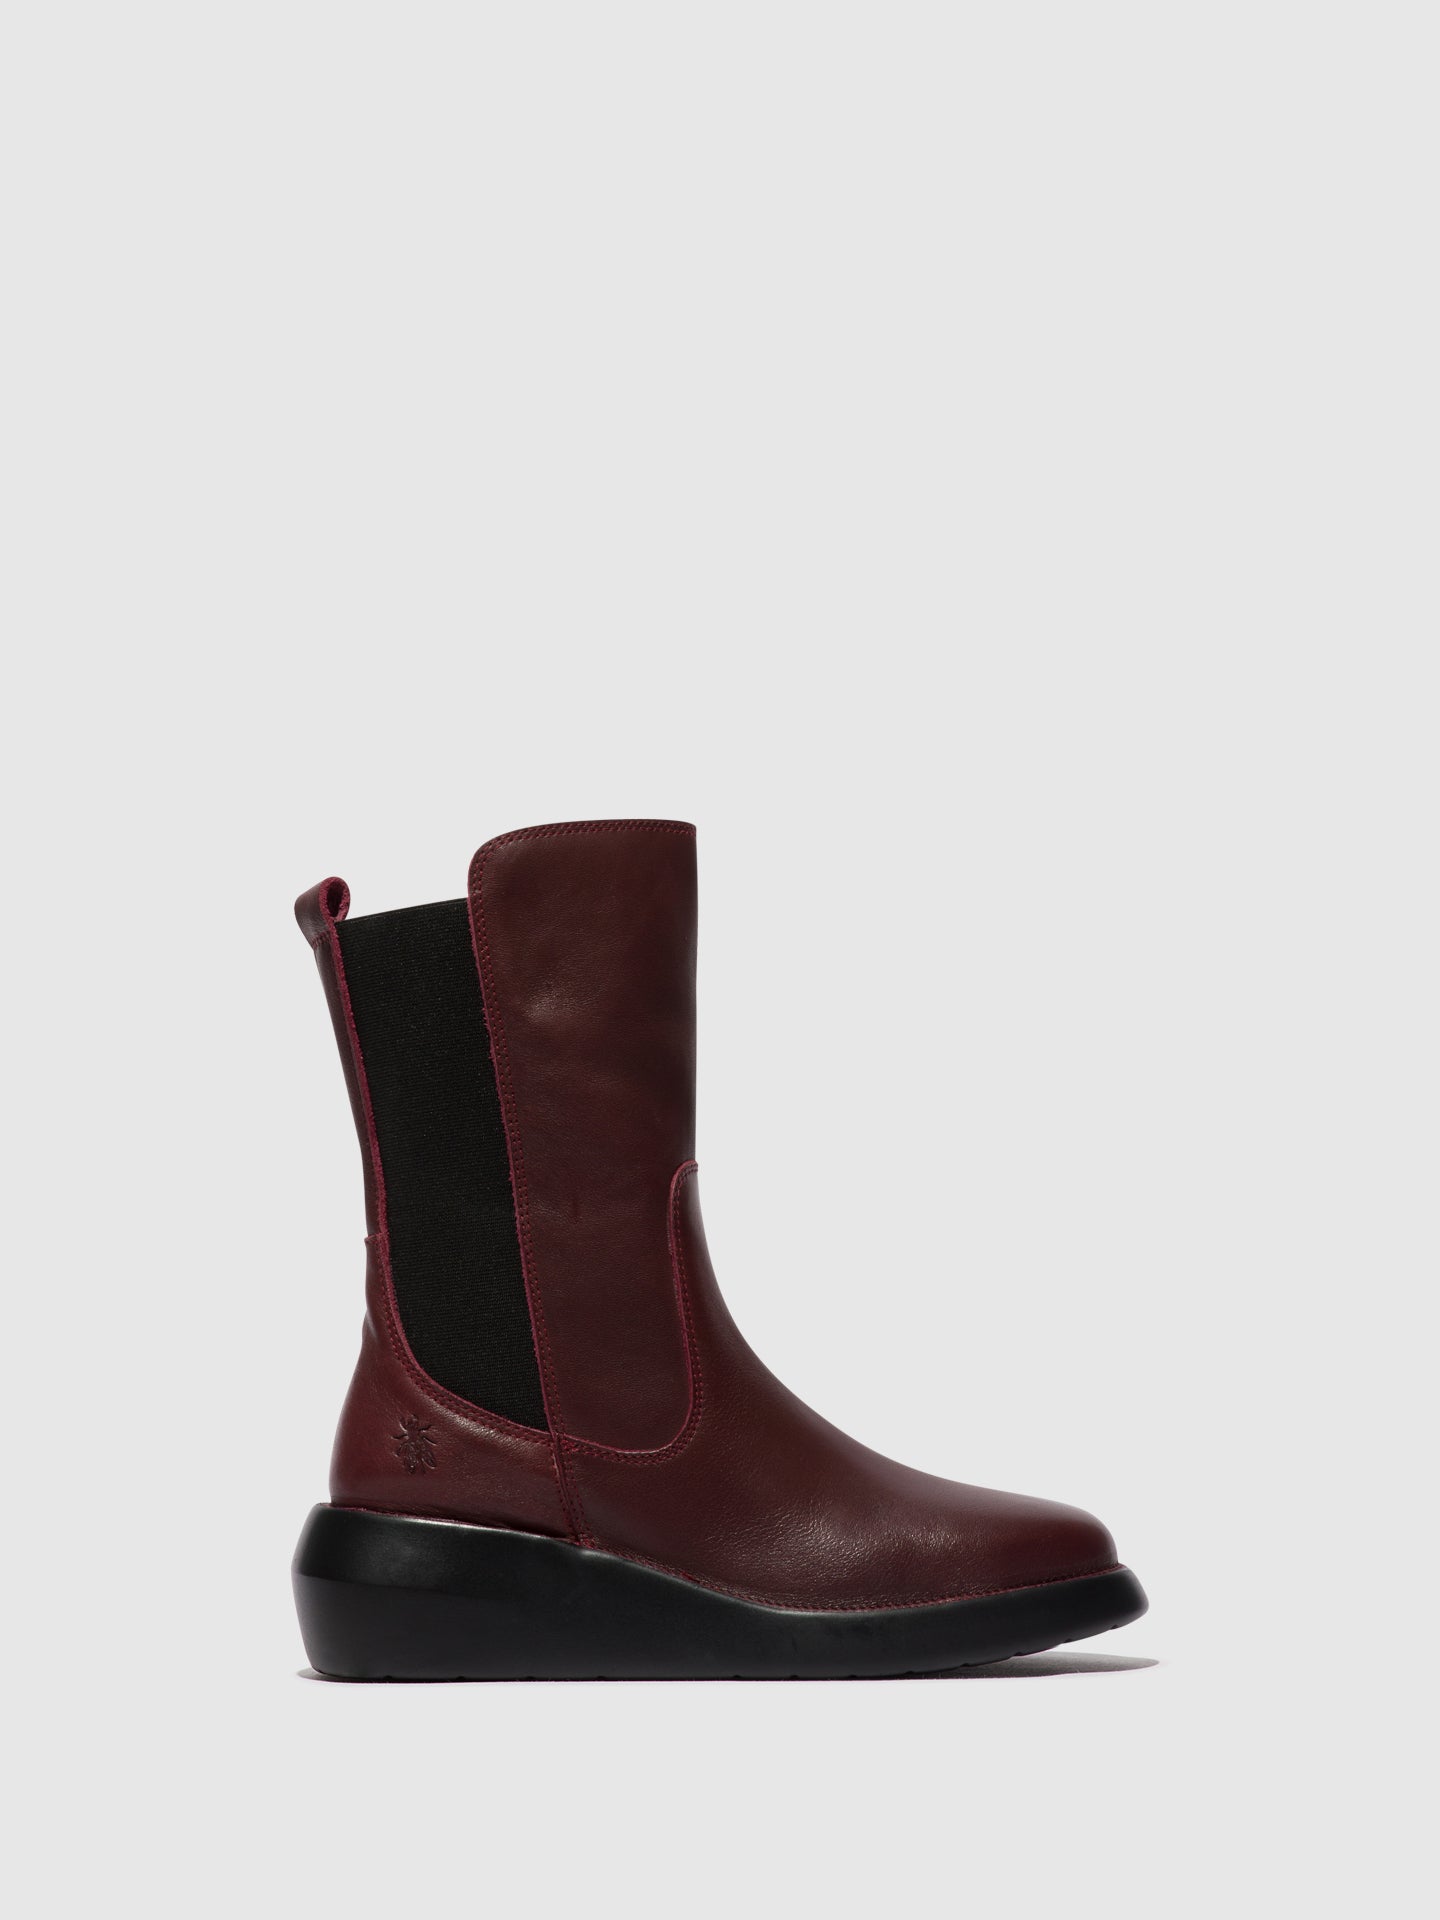 Fly London Women's Ster768fly Boots, Black (Black), 3 UK (36 EU) :  : Fashion